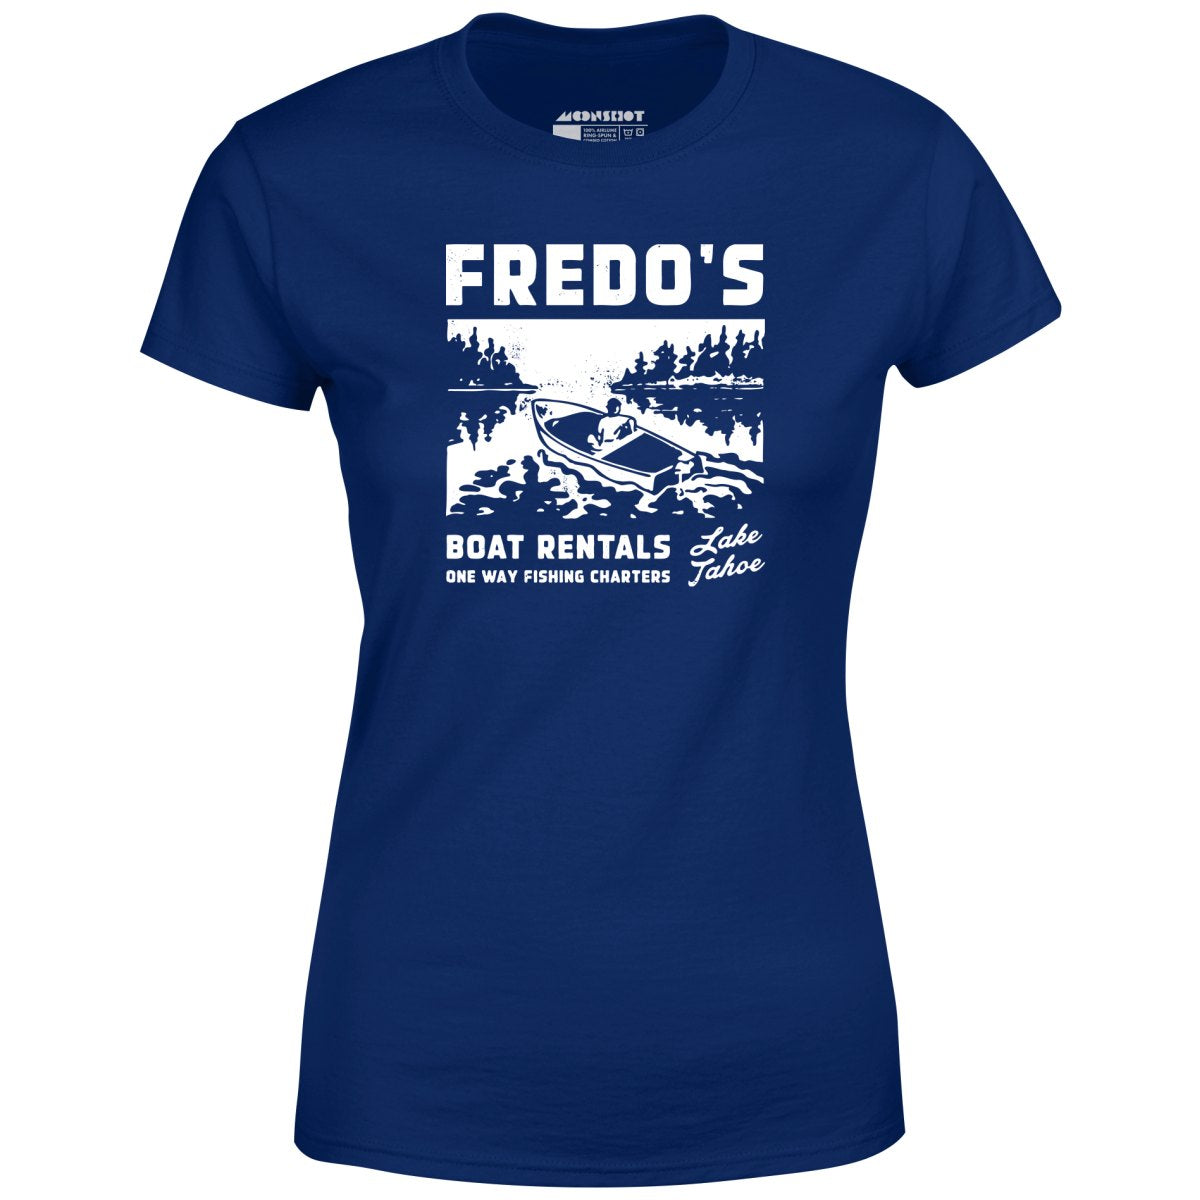 Fredo's Boat Rentals - Women's T-Shirt